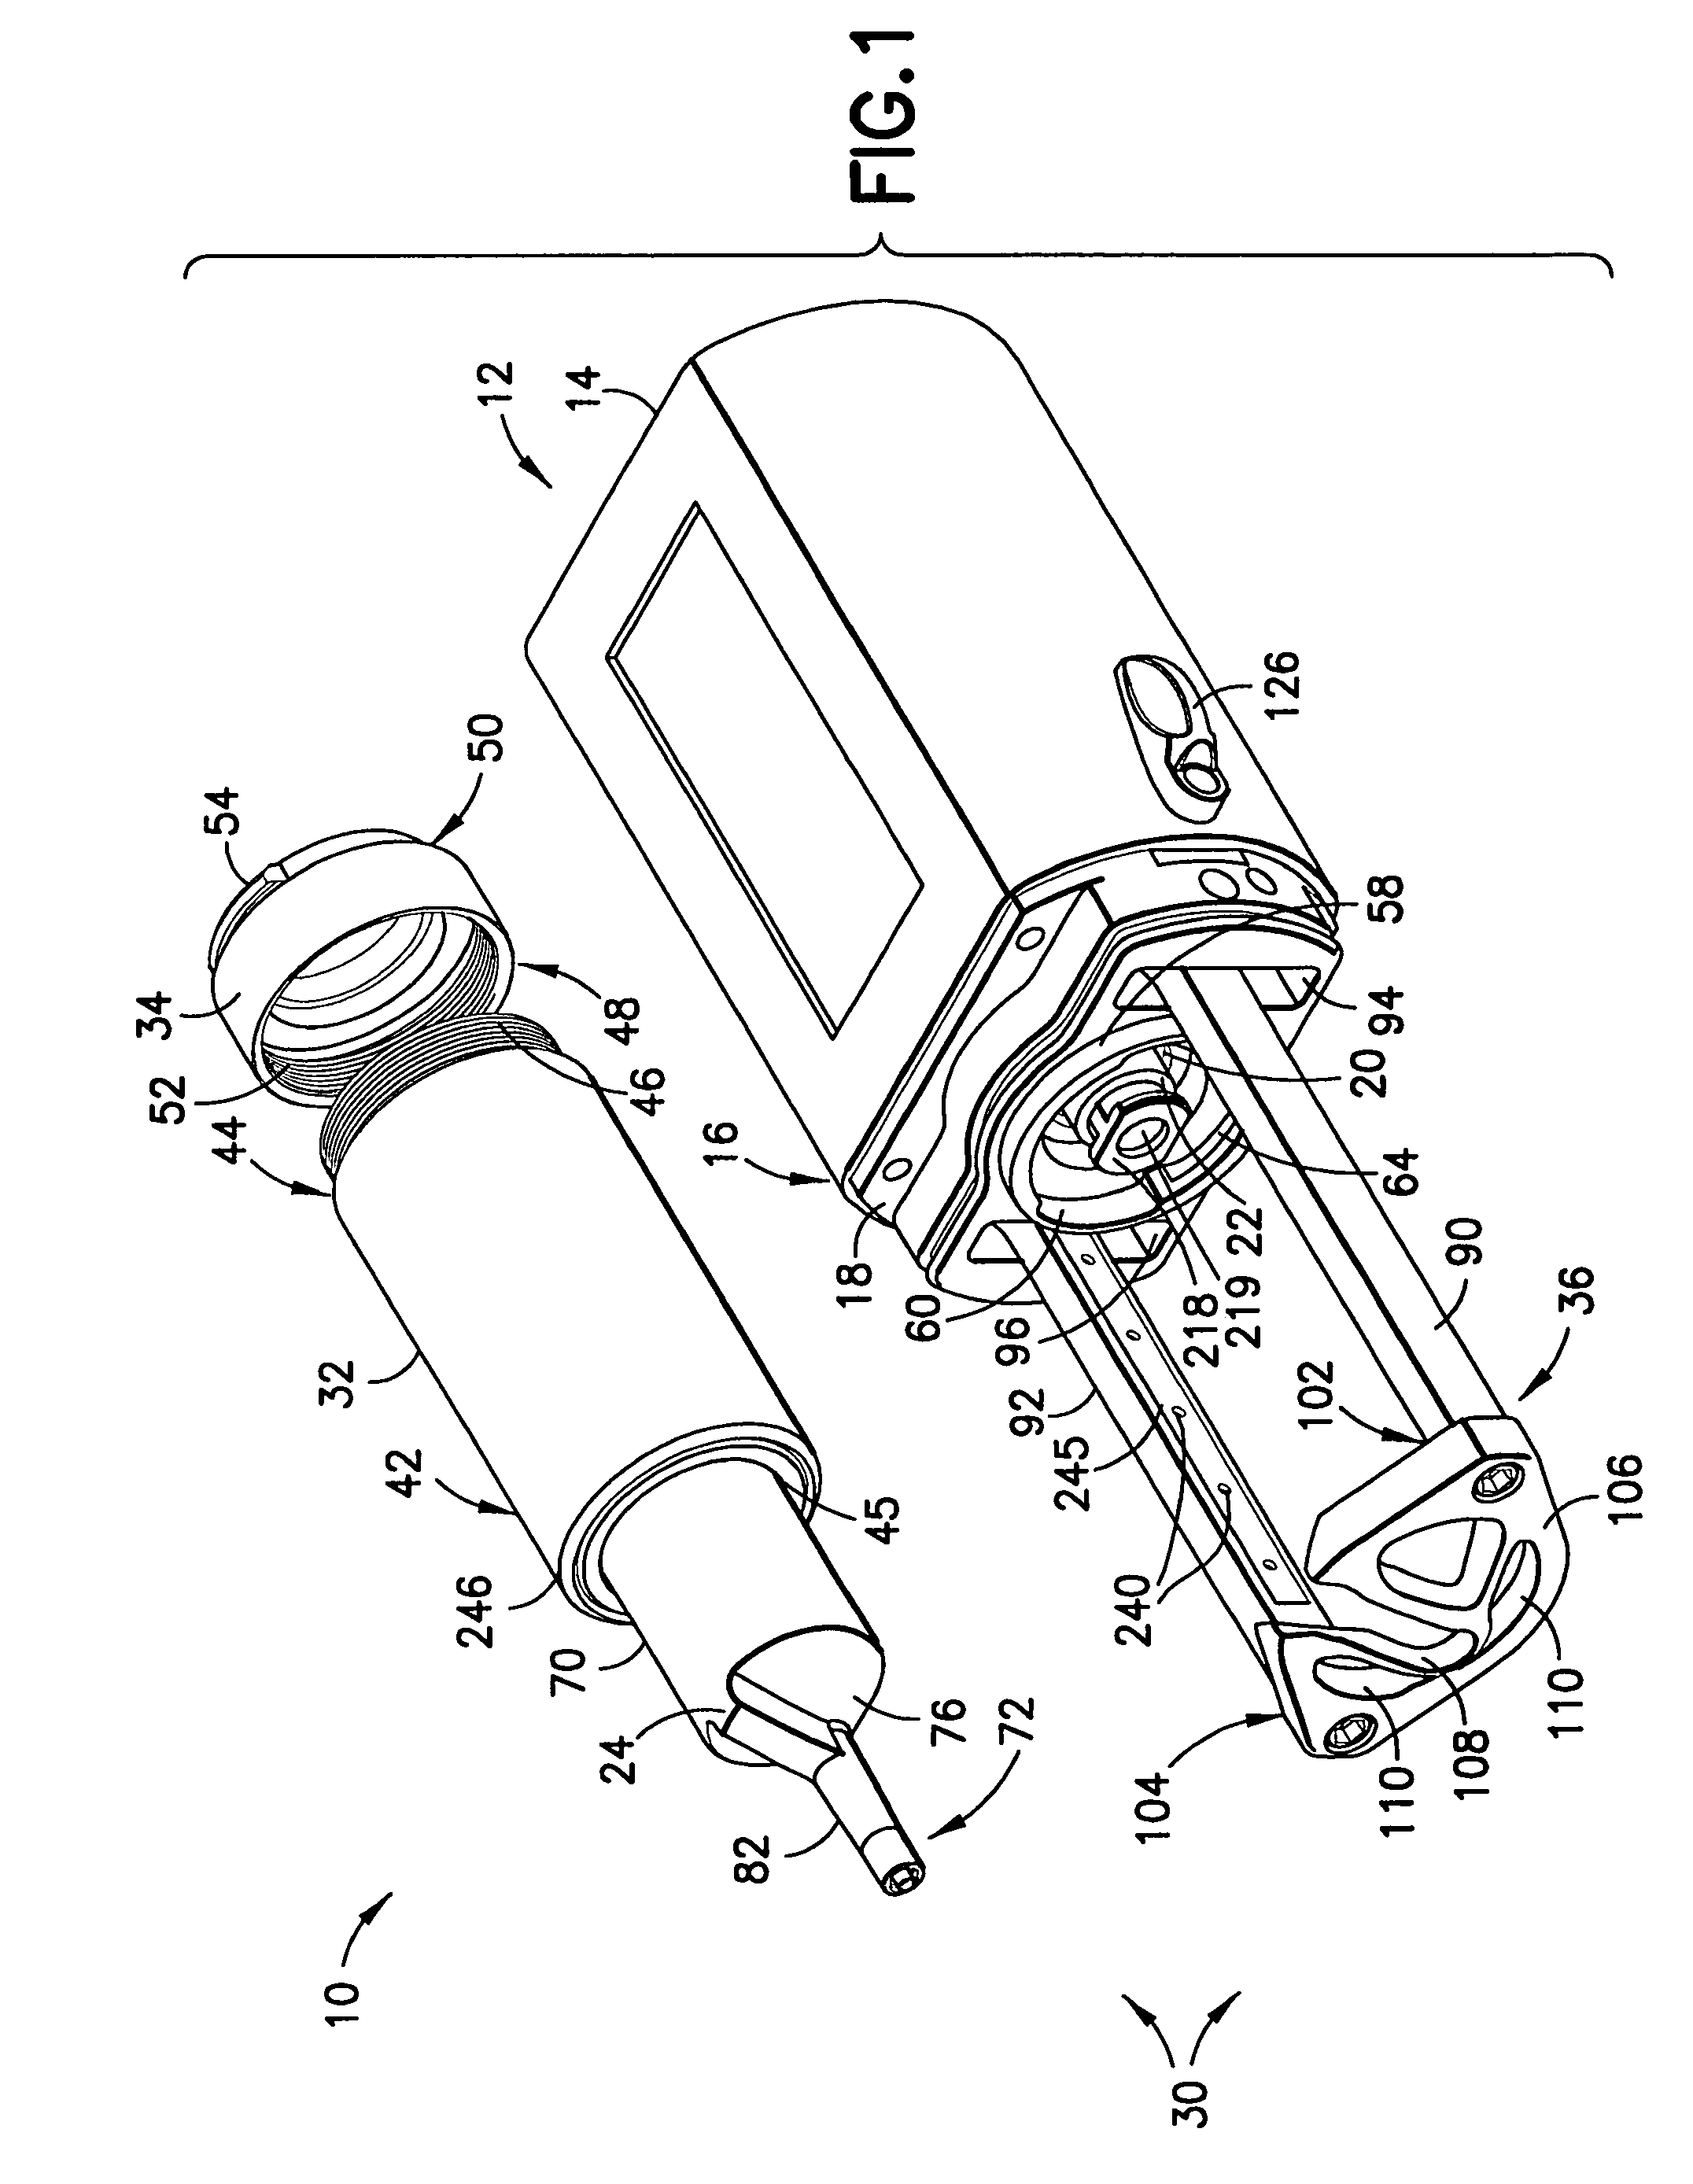 Front load pressure jacket system with syringe holder and light illumination